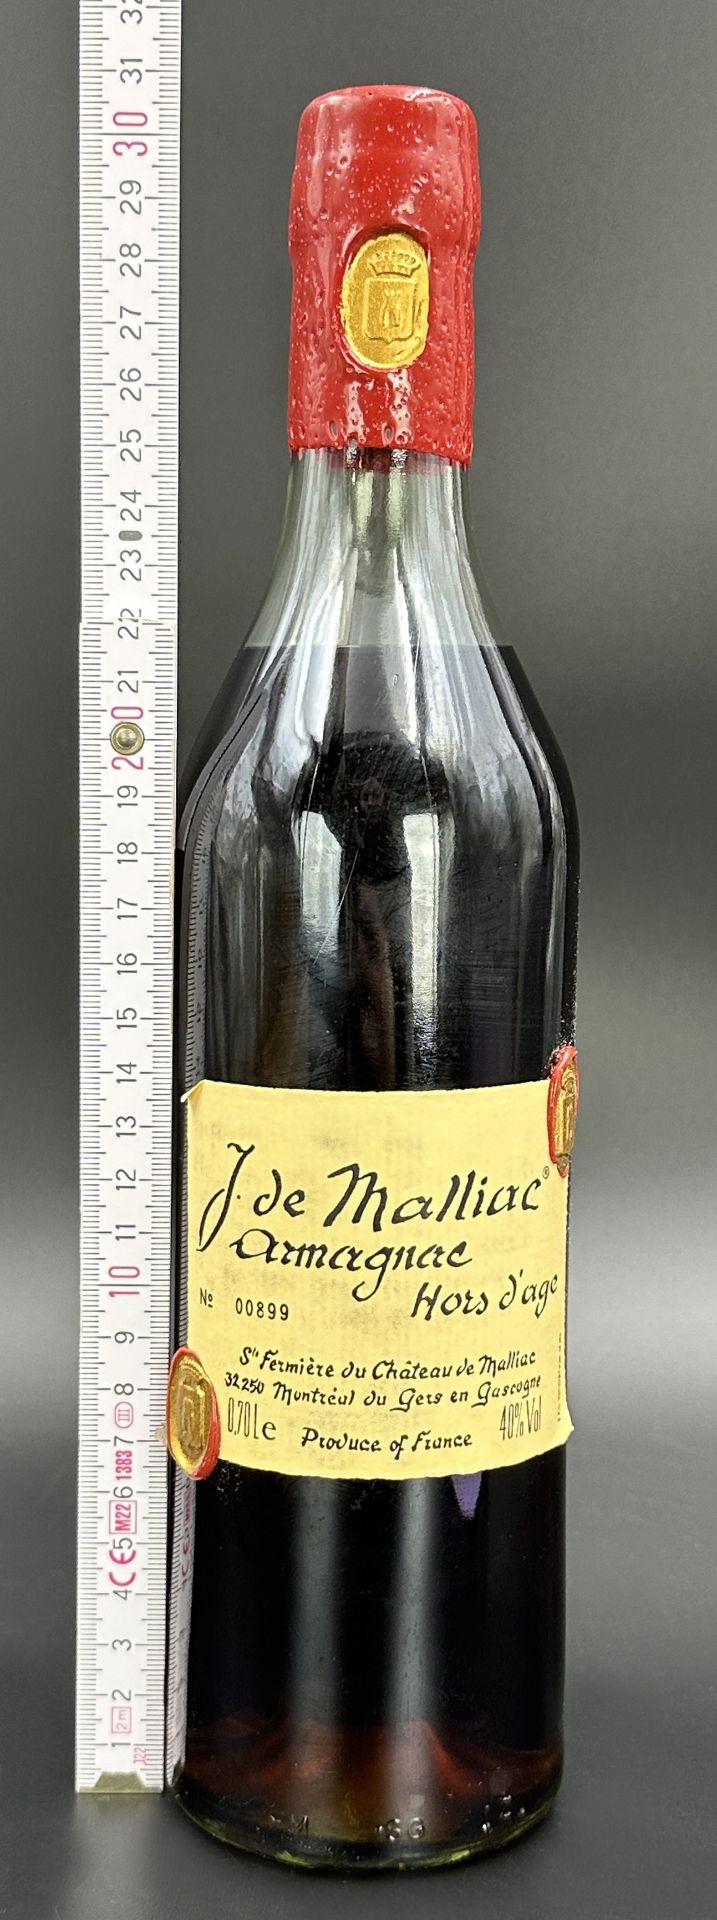 J. de MALLIAC. 1 bottle of Armagnac. Hors dänge. France. - Image 11 of 12